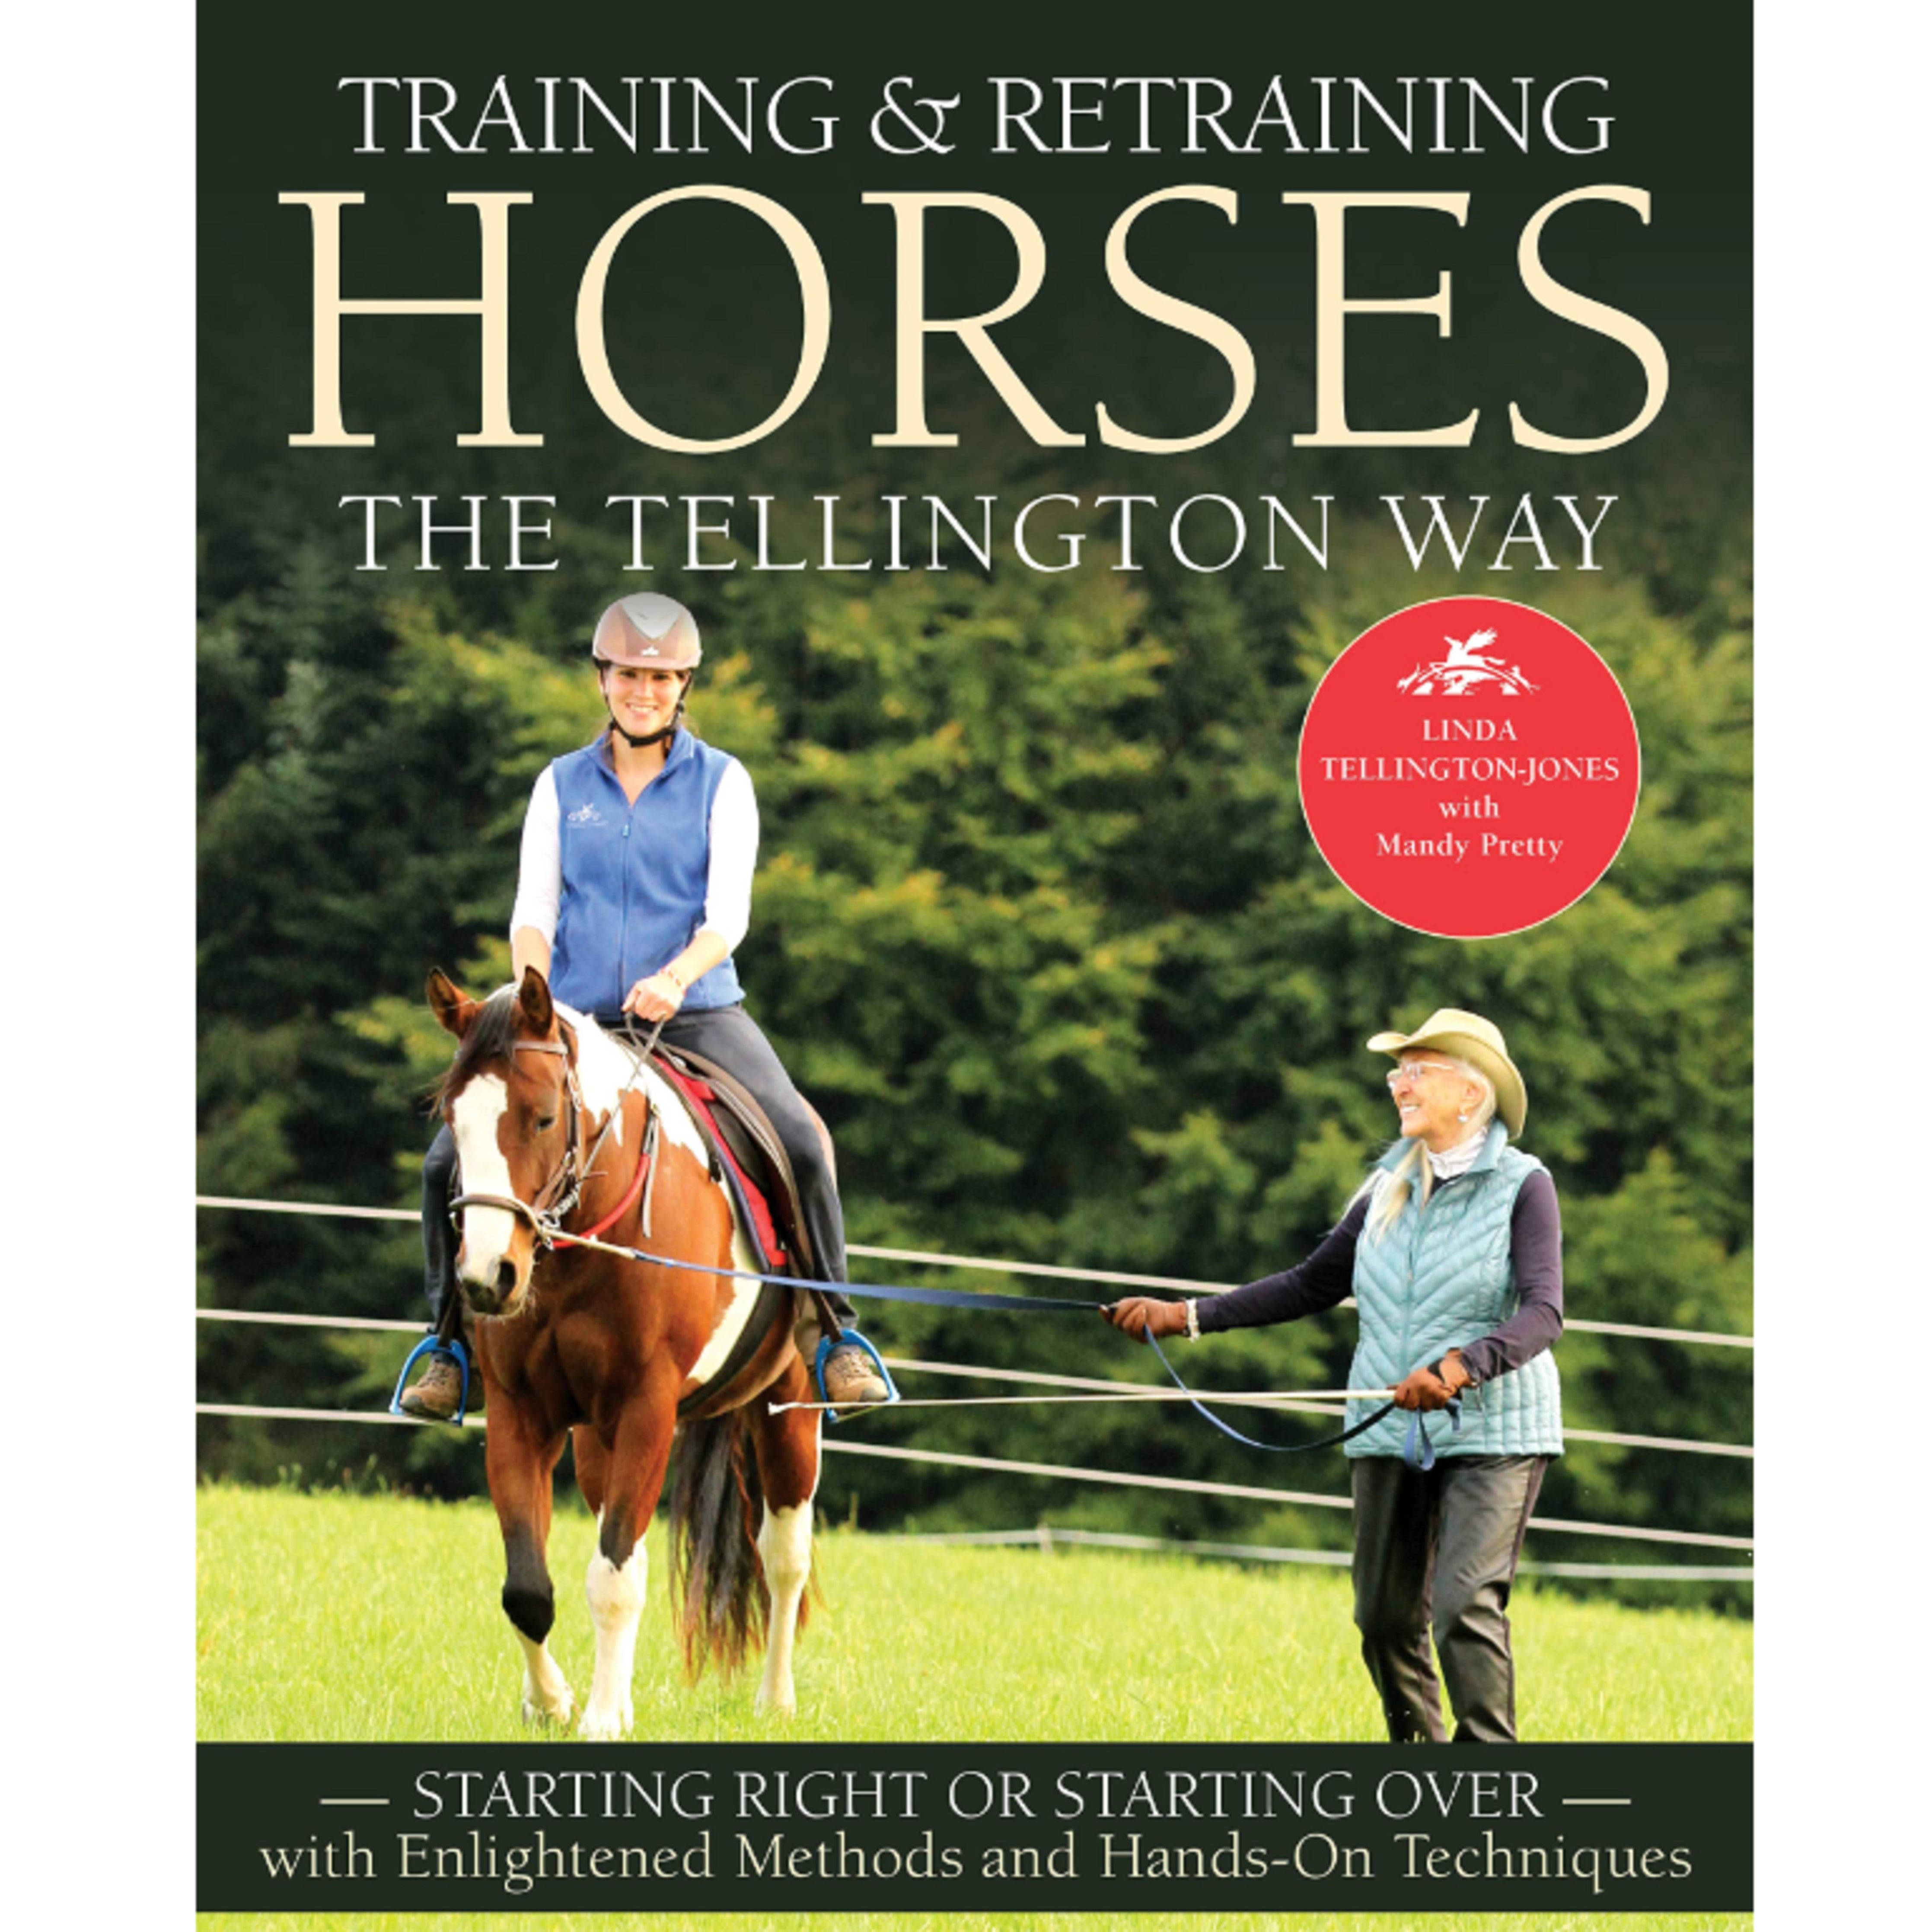 Training & Retraining Horses the Tellington Way